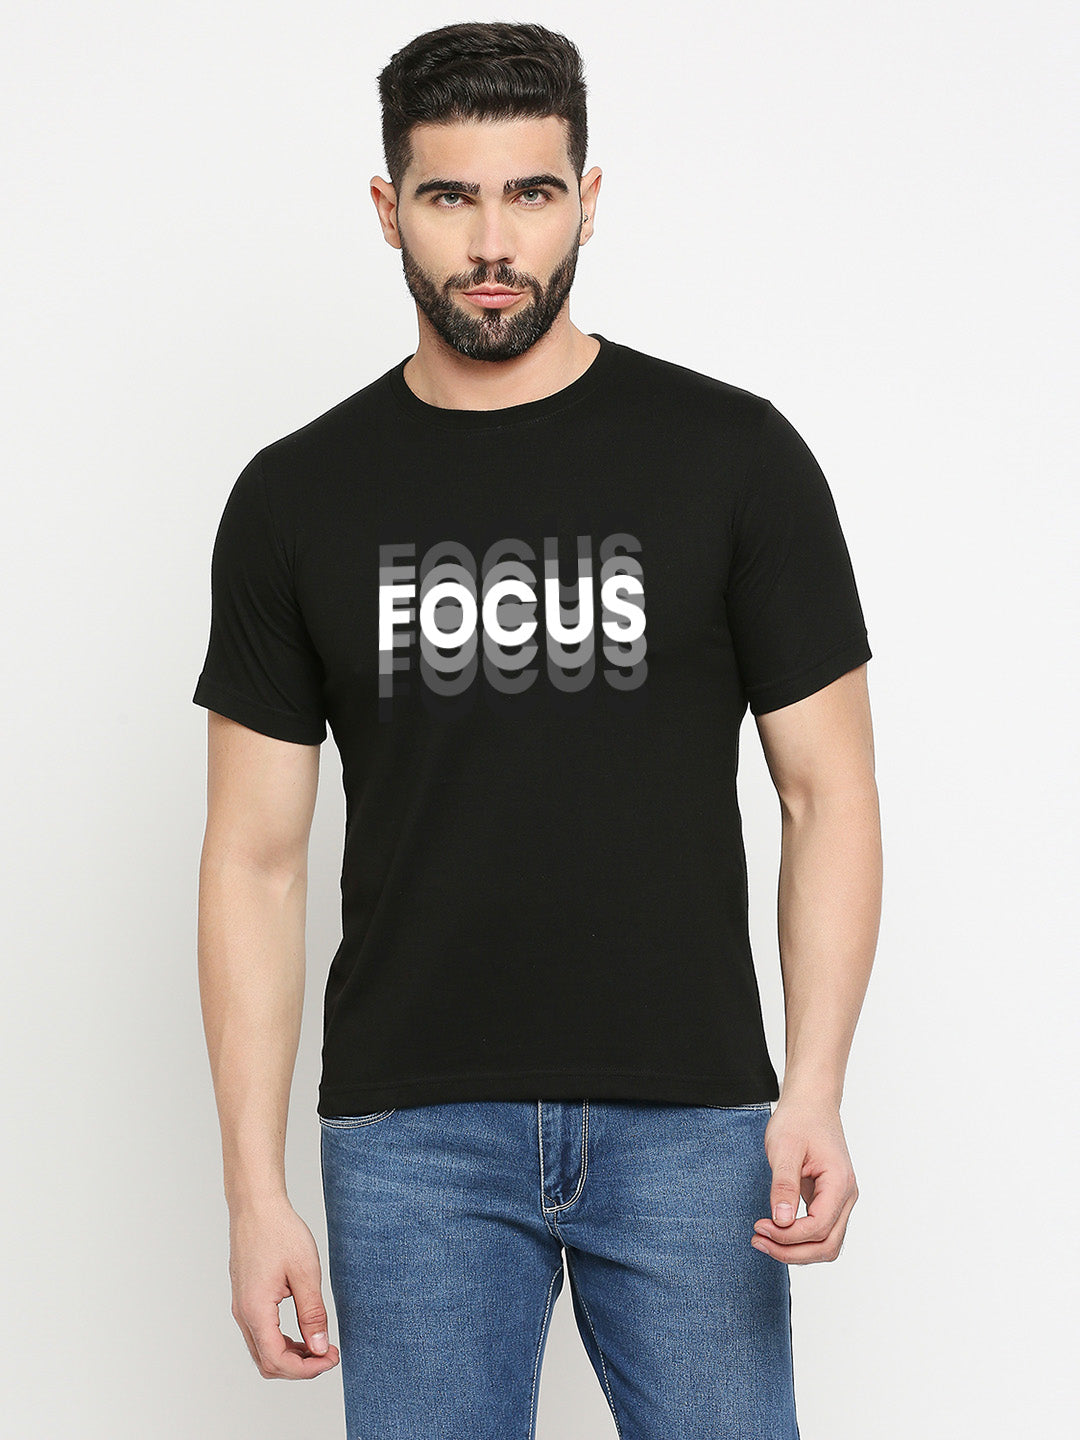 Focus Black T-Shirt